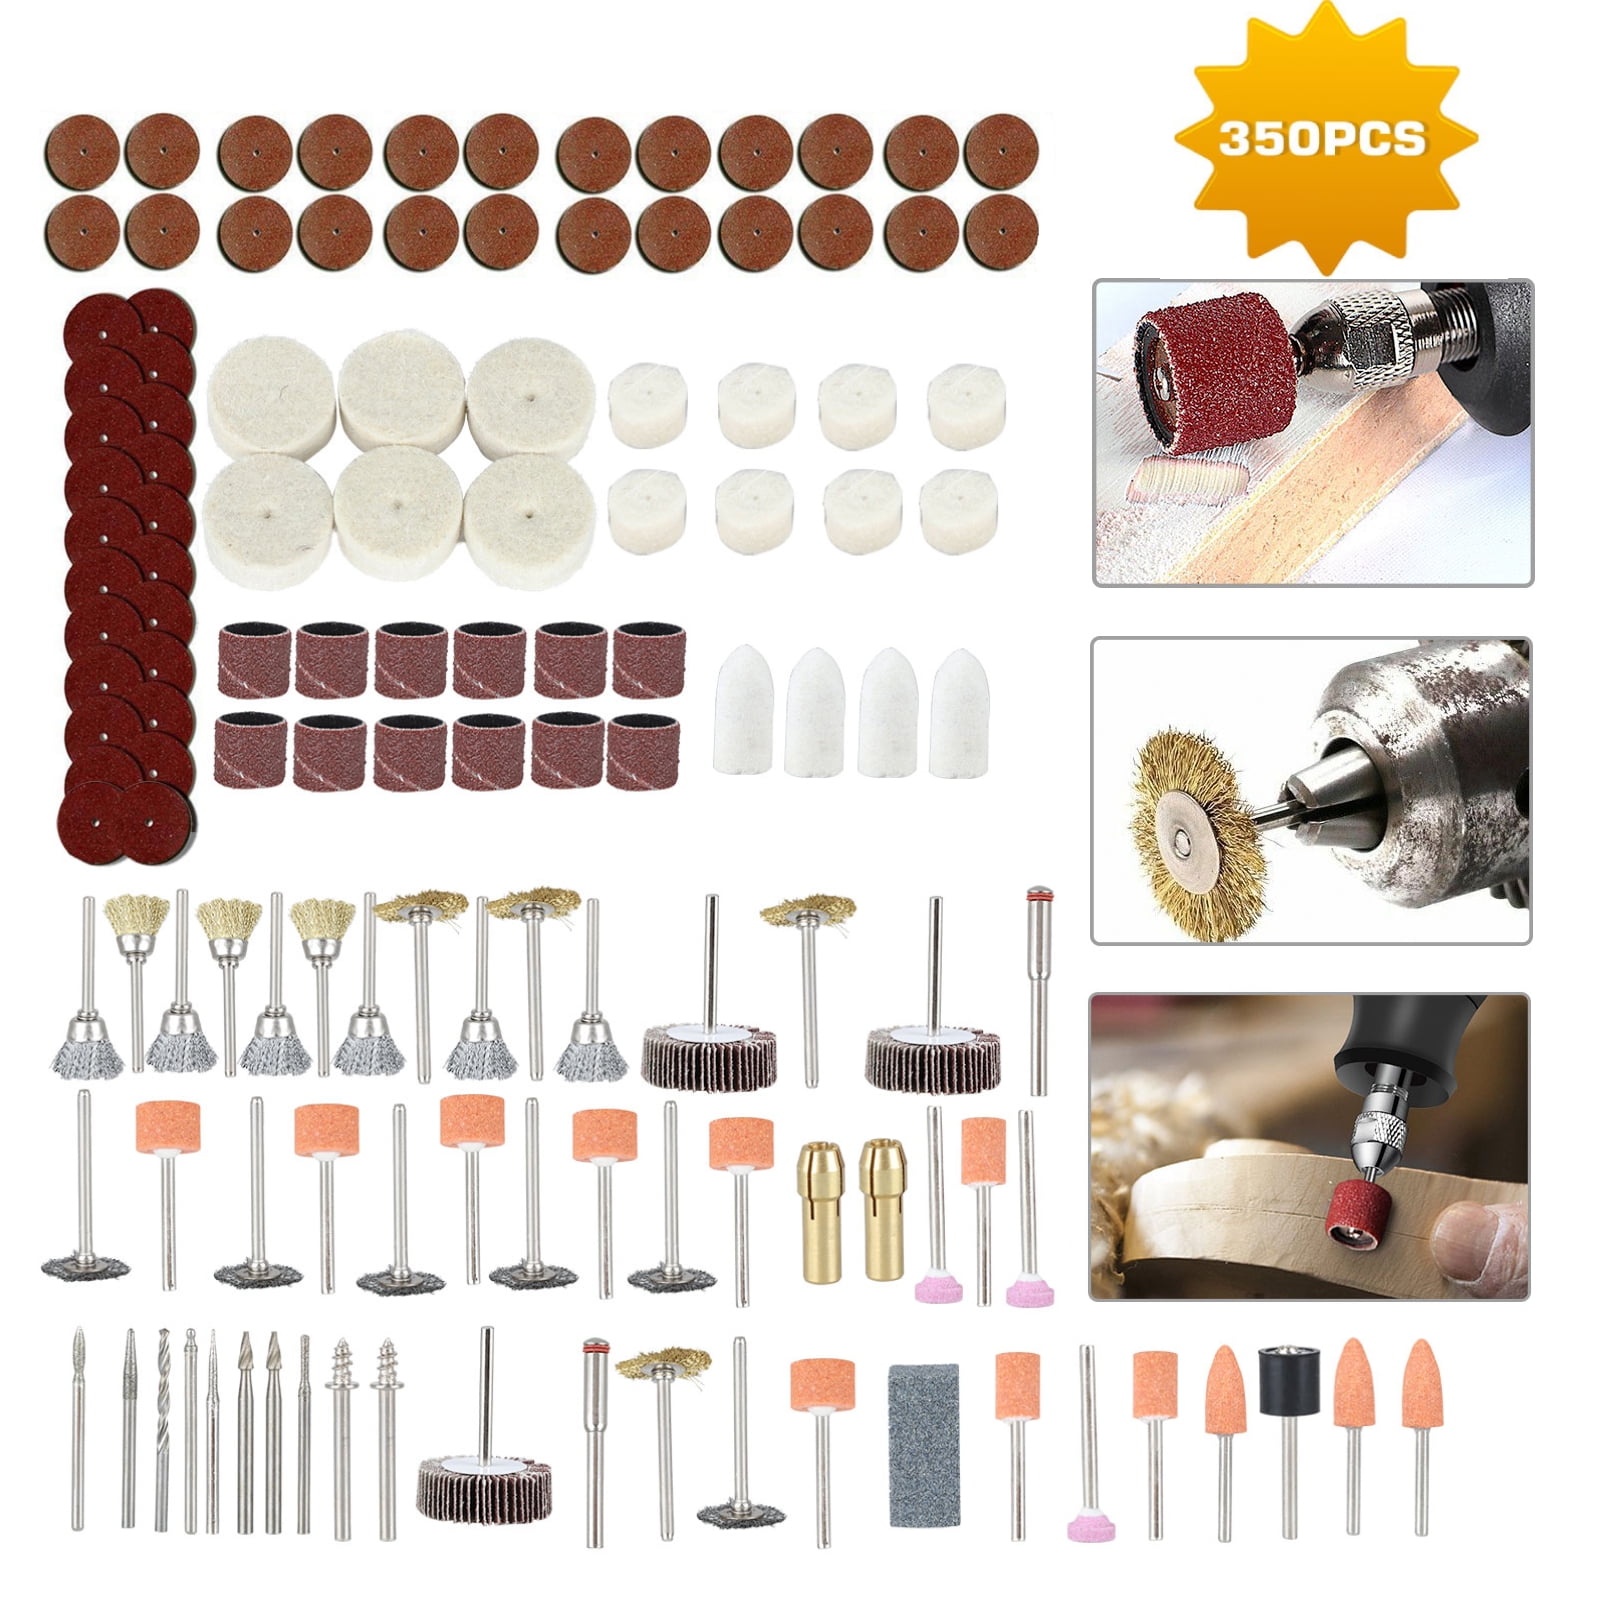 SALE Polishing Sanding Kit Drill Accessories Bit for Dremel Rotary Tool 350PCS 